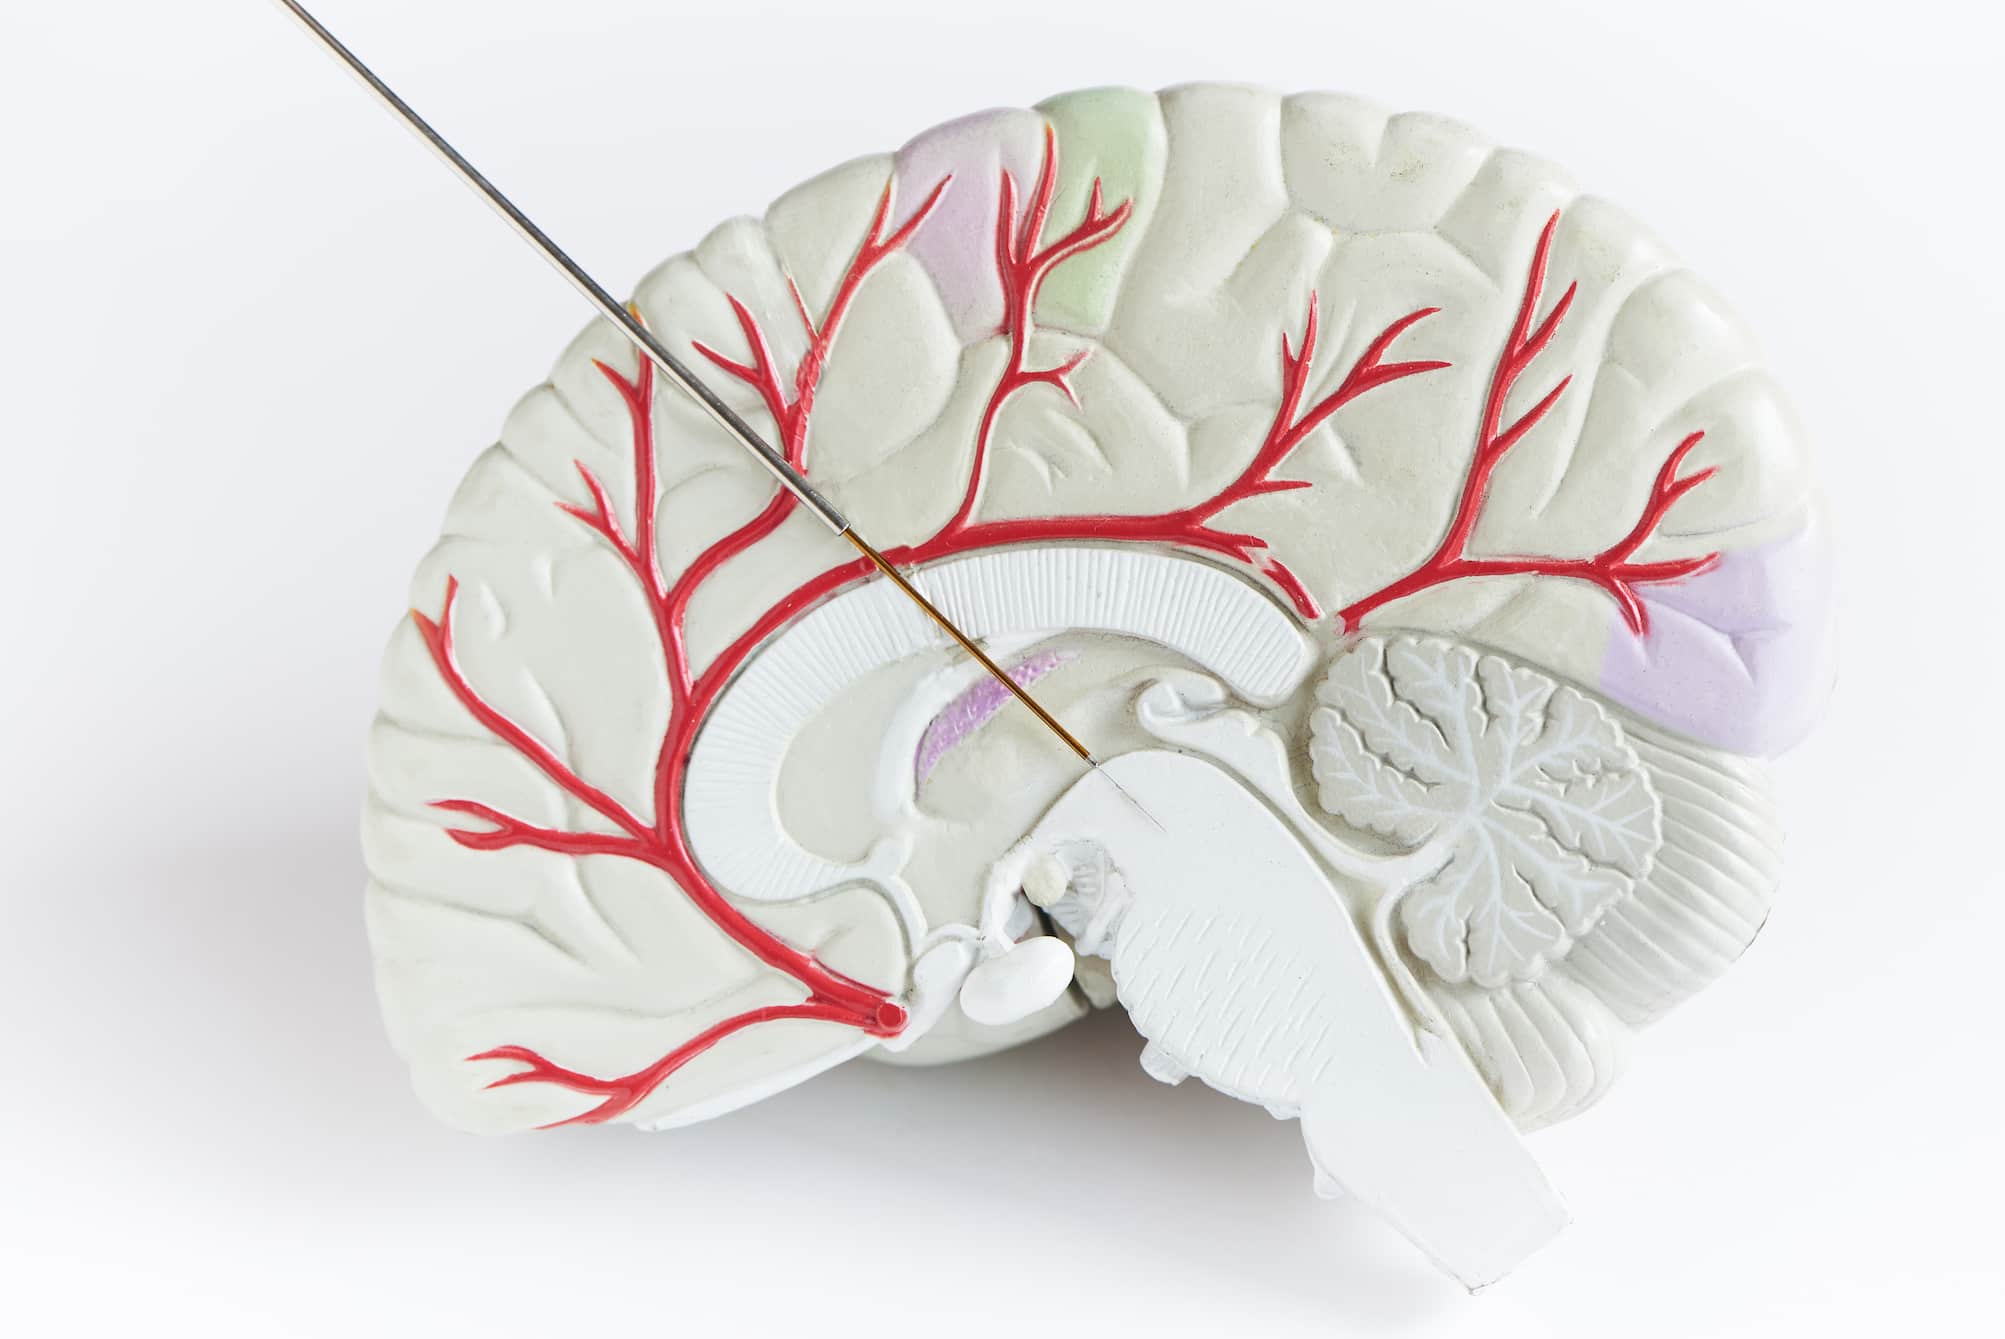 Deep Brain Stimulation as a Treatment Option